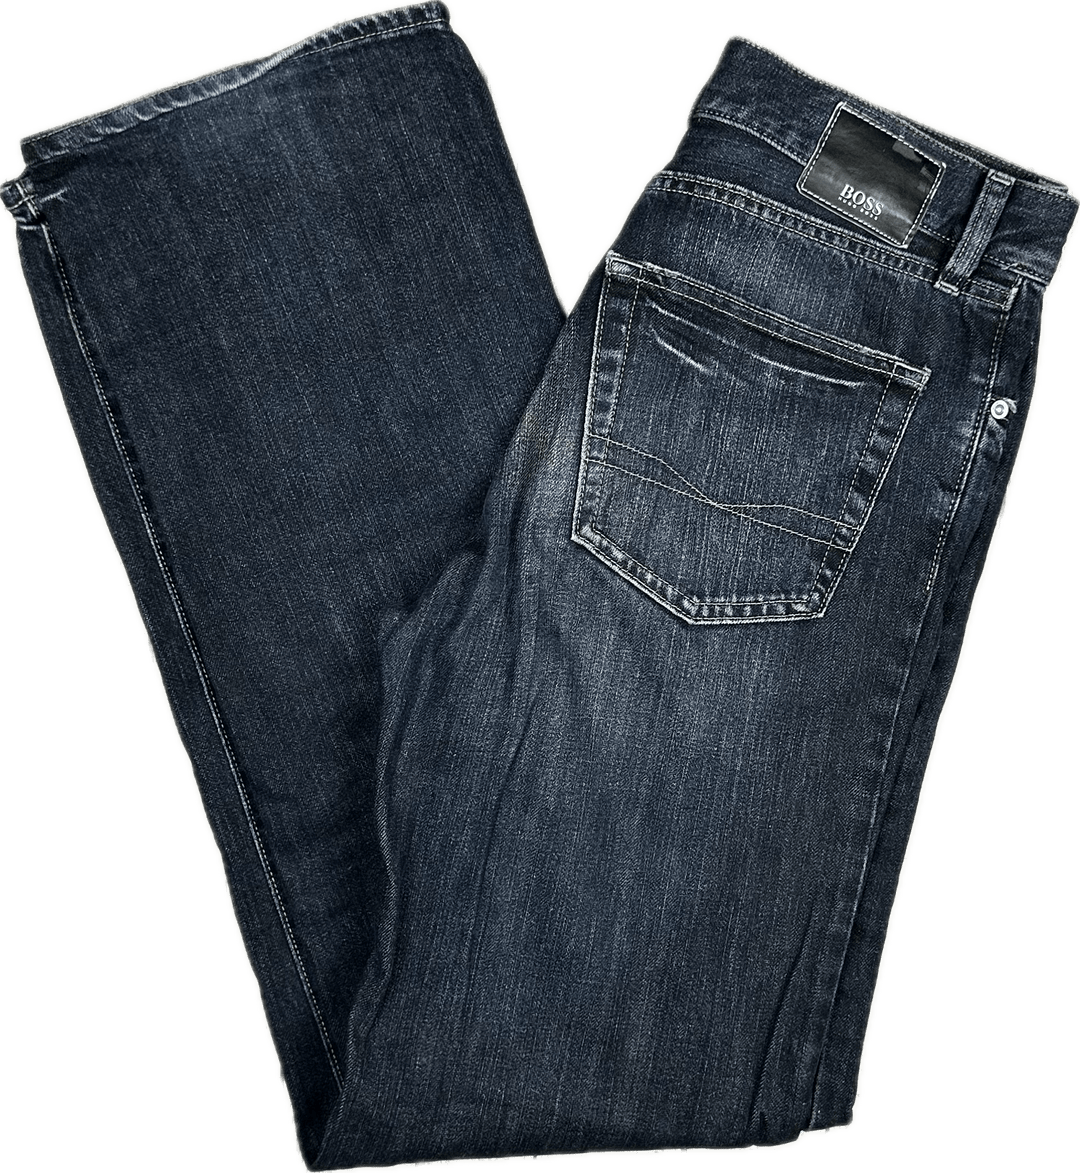 Hugo Boss Men's 'Texas' Classic Jeans - Size 30/34 - Jean Pool